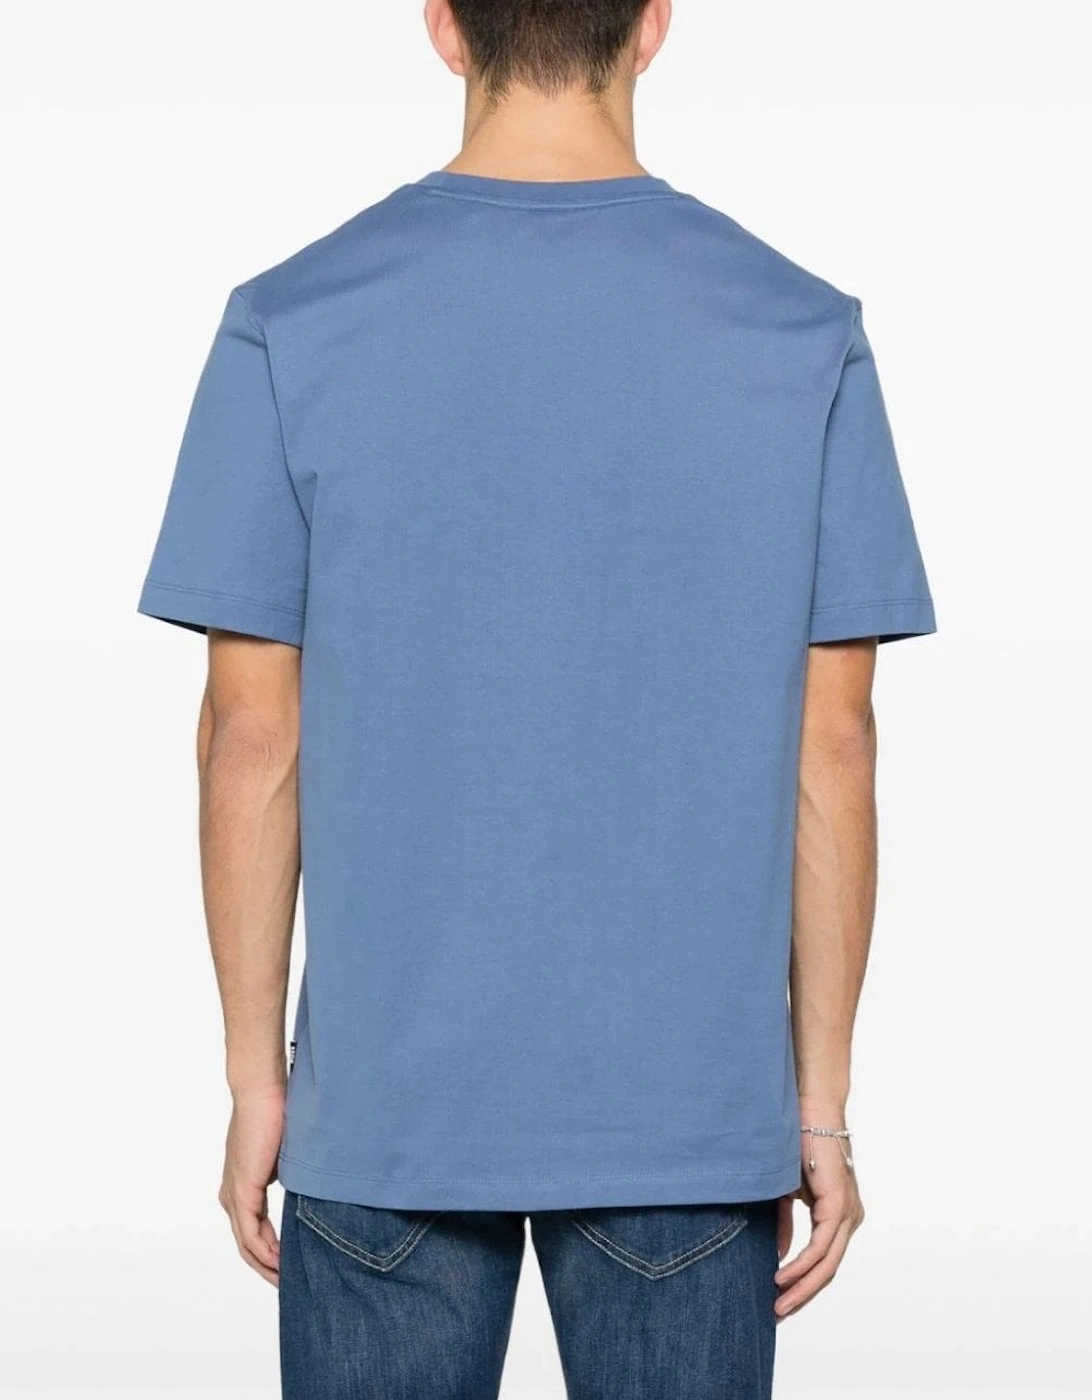 Tiburt 427 T-shirt Blue